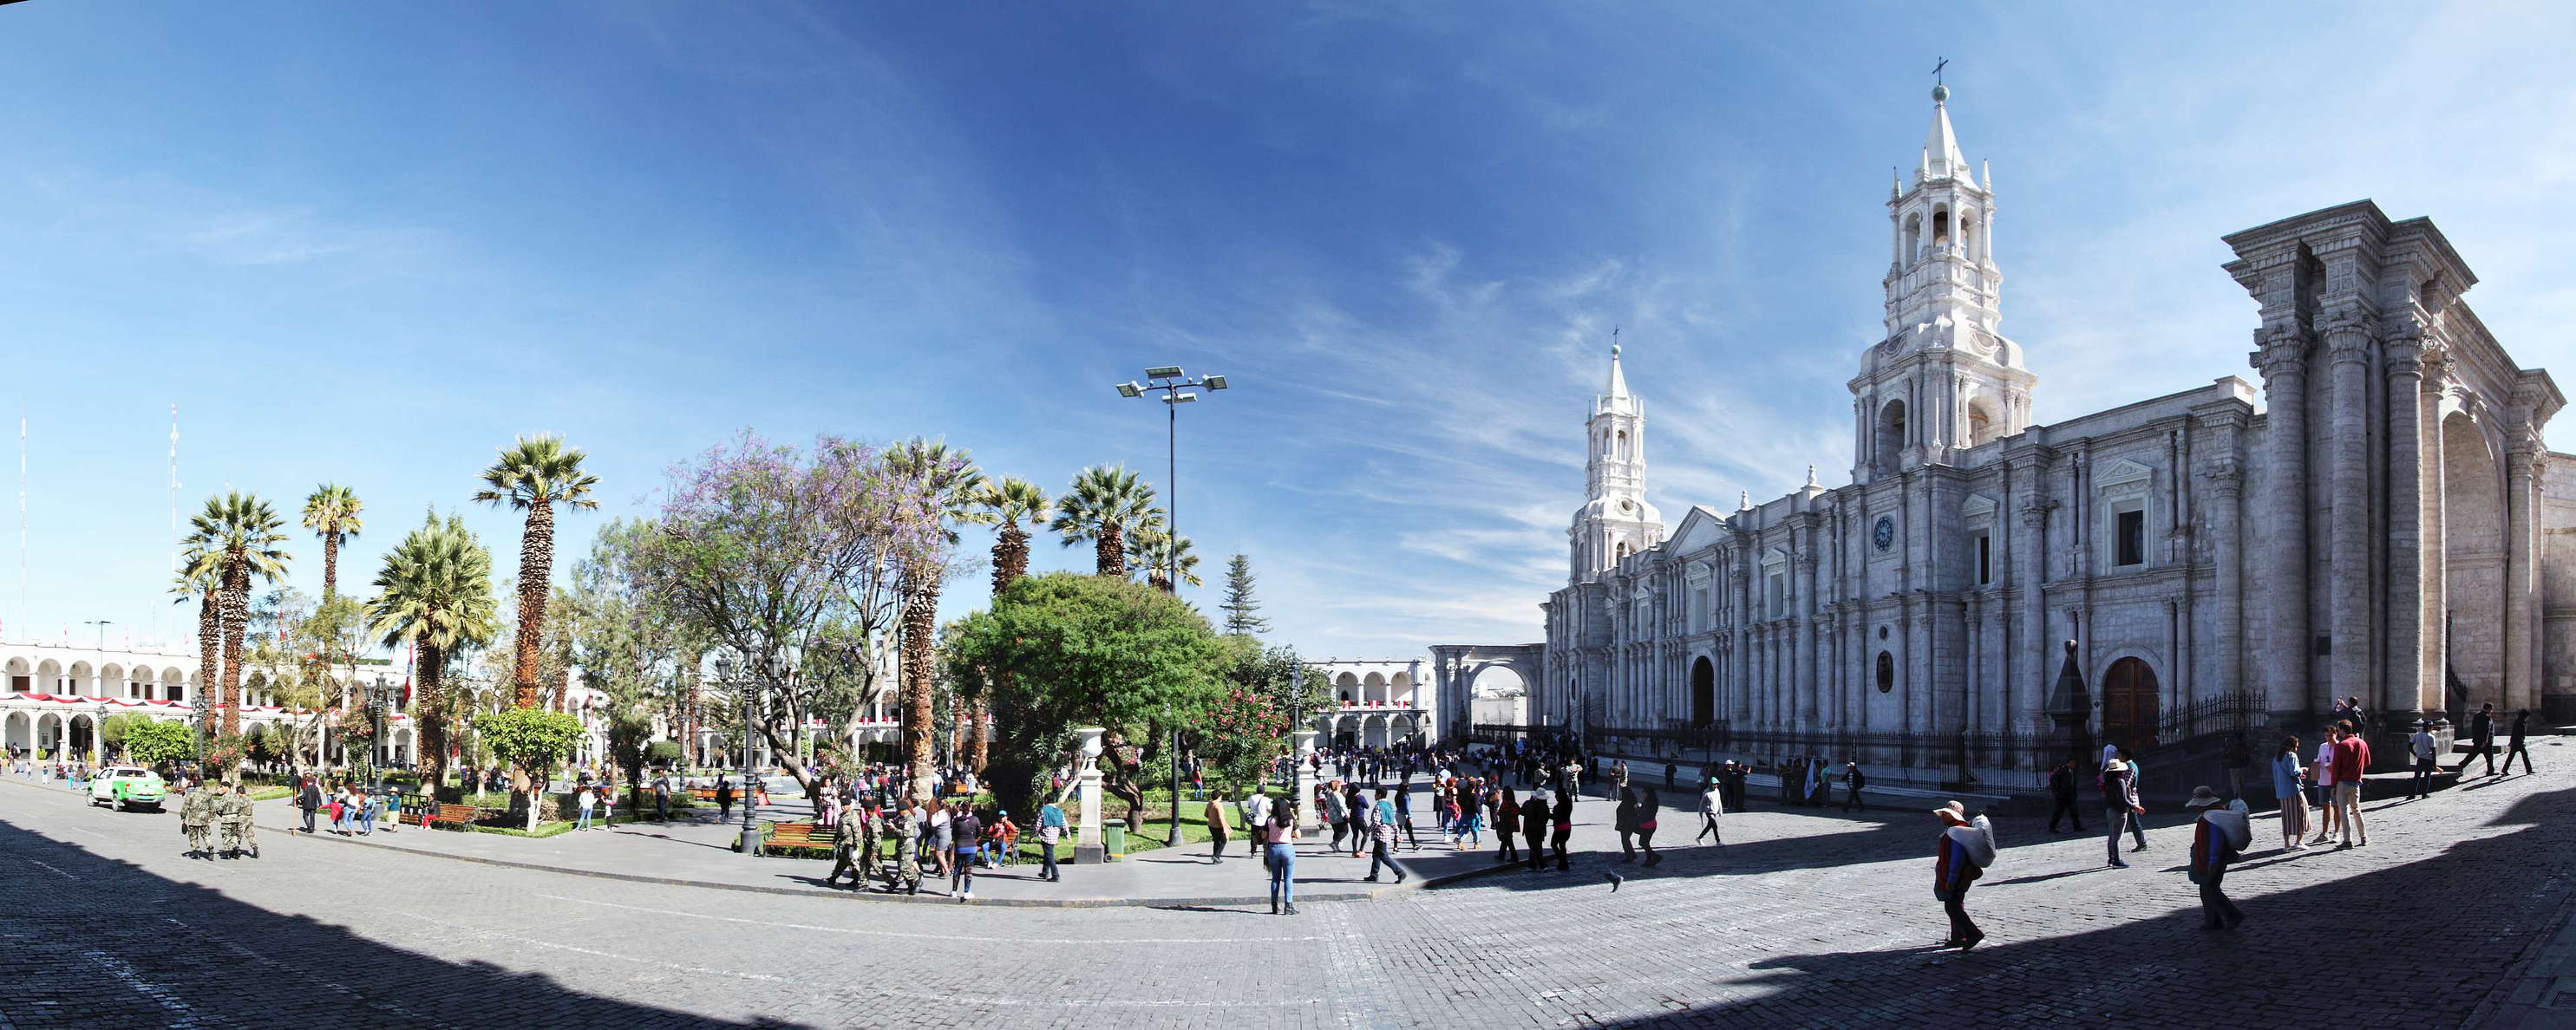 Arequipa | Plaza de Armas with Catedral de Arequipa